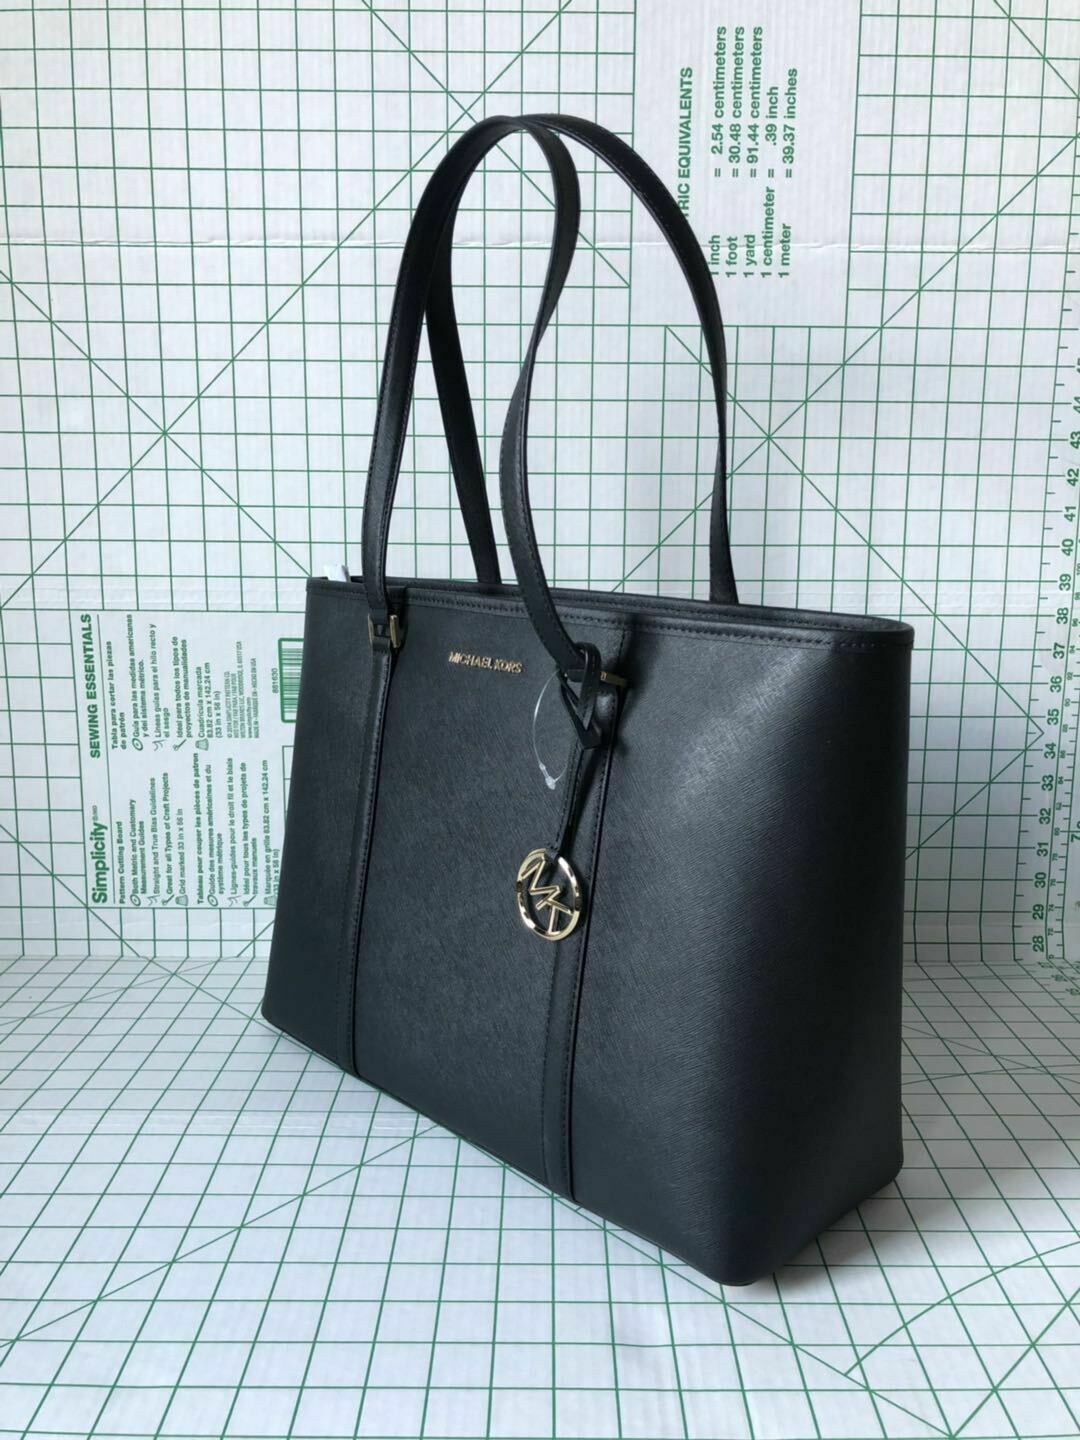 Michael Kors Sady Large Multifunction Top Zip Tote Saffiano Bag in Black - Women&#39;s Handbags & Bags